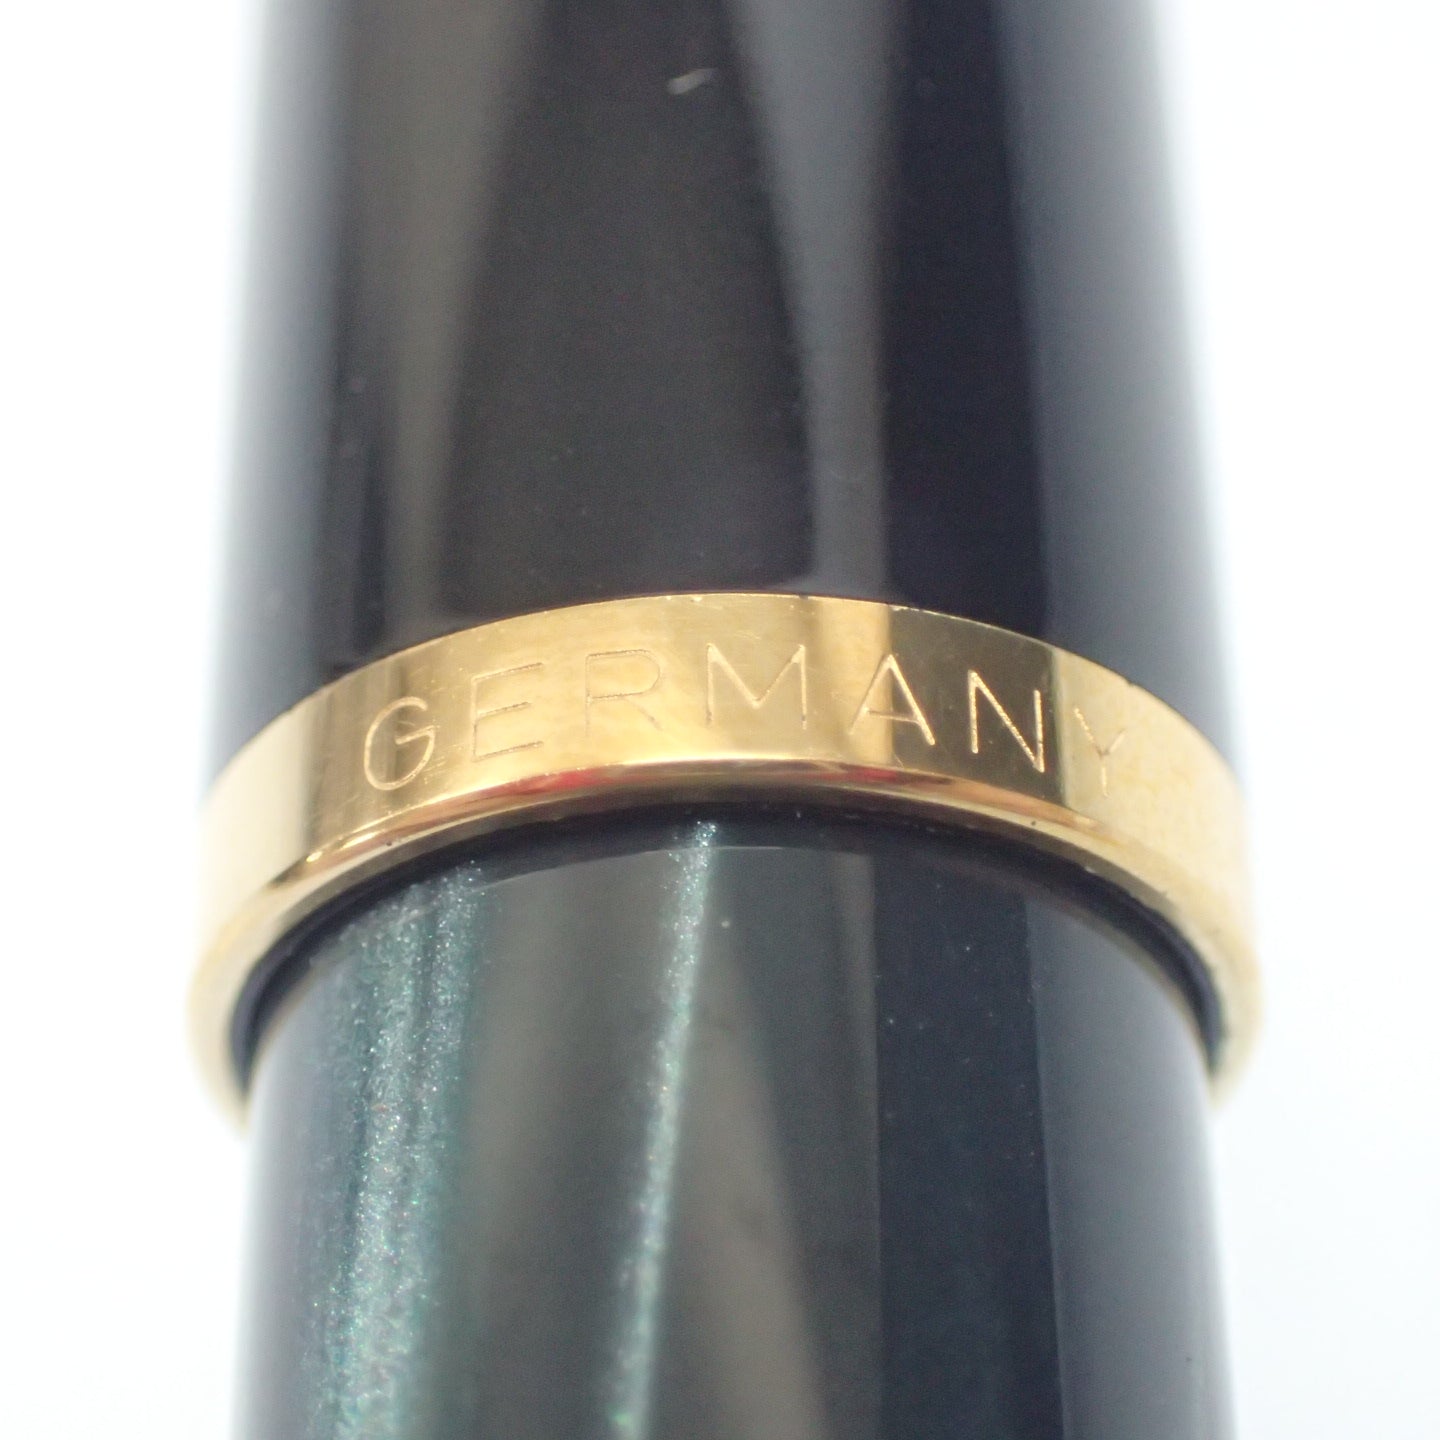 Used ◆ Pelikan fountain pen Souberane blue marble pattern Pelikan [AFI18] 